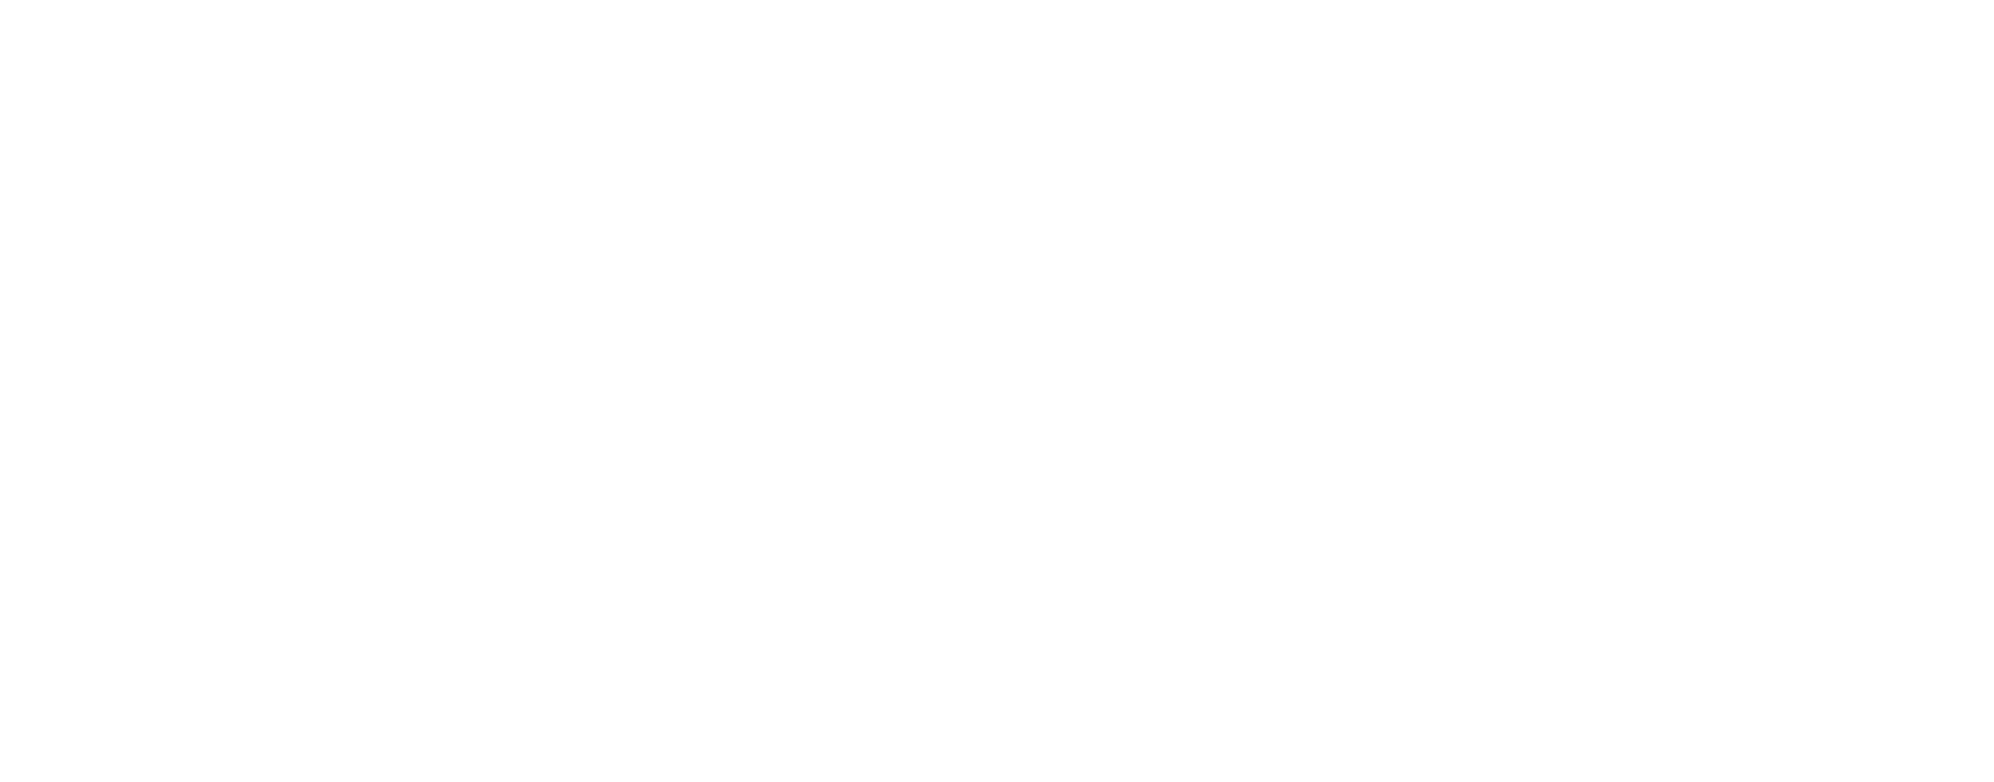 OpenFF Toolkit 0.11.4+4.g989c5f6f.dirty documentation logo